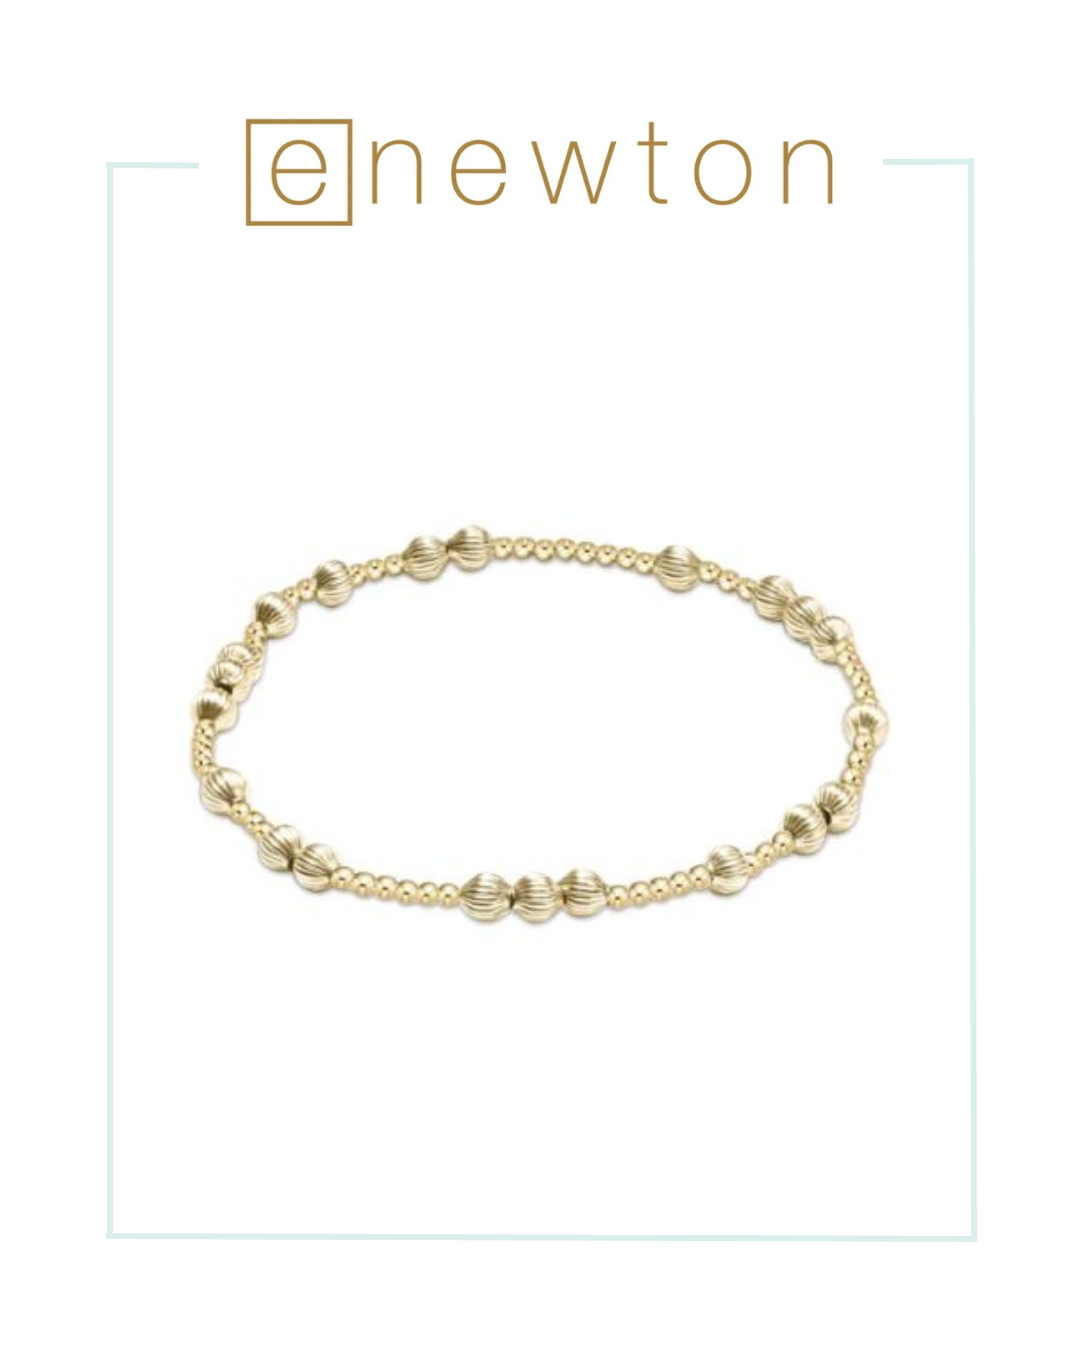 E Newton Hope Unwritten Dignity 4mm Bead Bracelet - Gold-Bracelets-ENEWTON-The Village Shoppe, Women’s Fashion Boutique, Shop Online and In Store - Located in Muscle Shoals, AL.